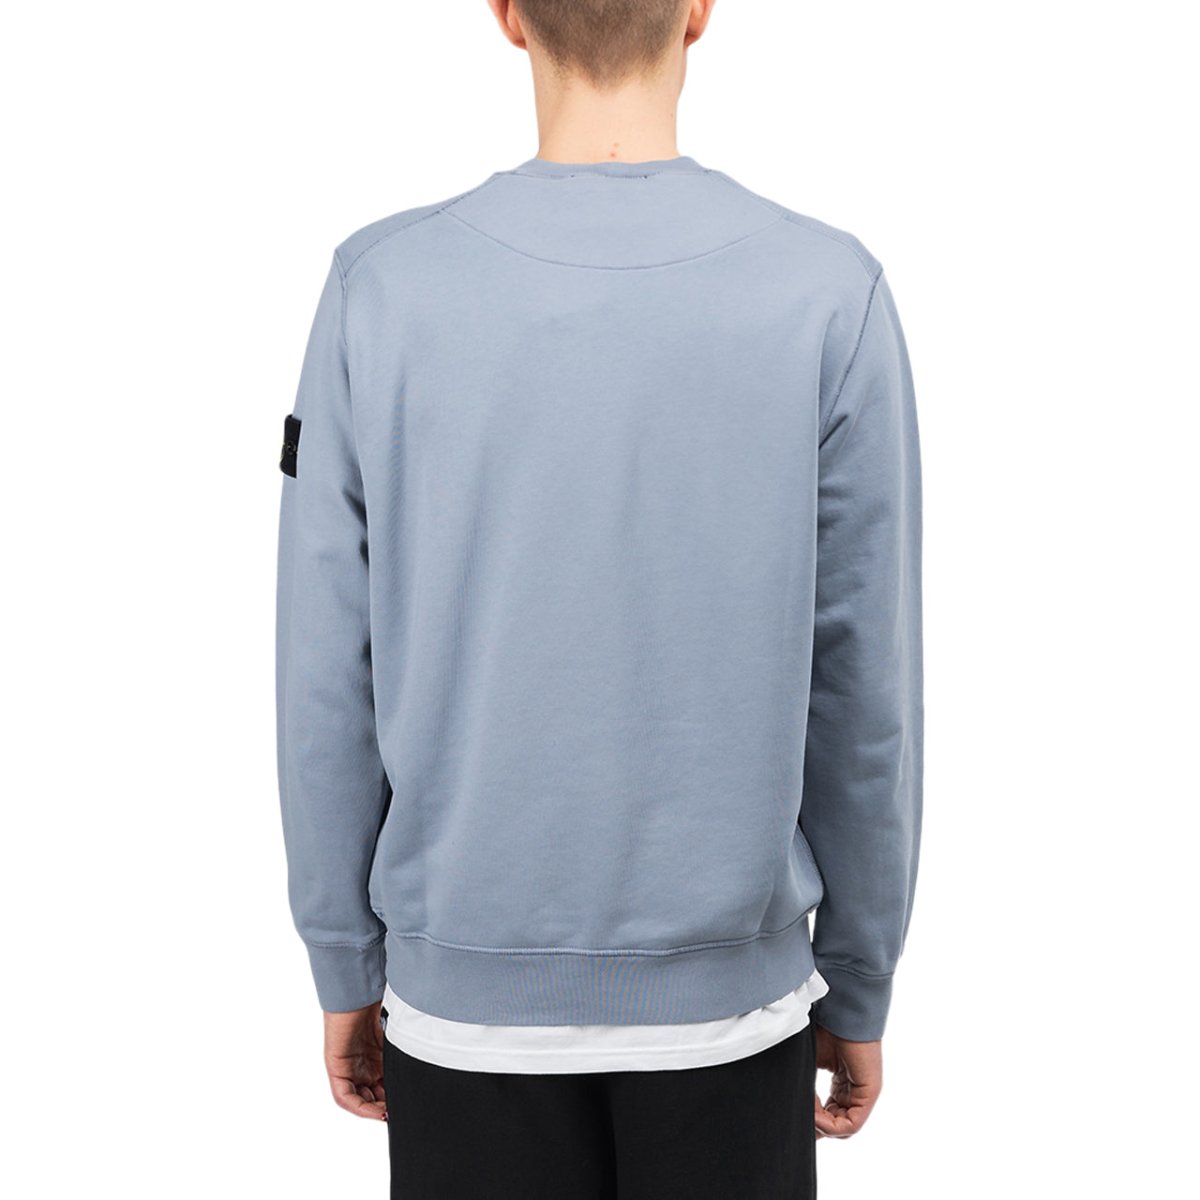 Stone Island Sweatshirt (Blaugrau)  - Allike Store